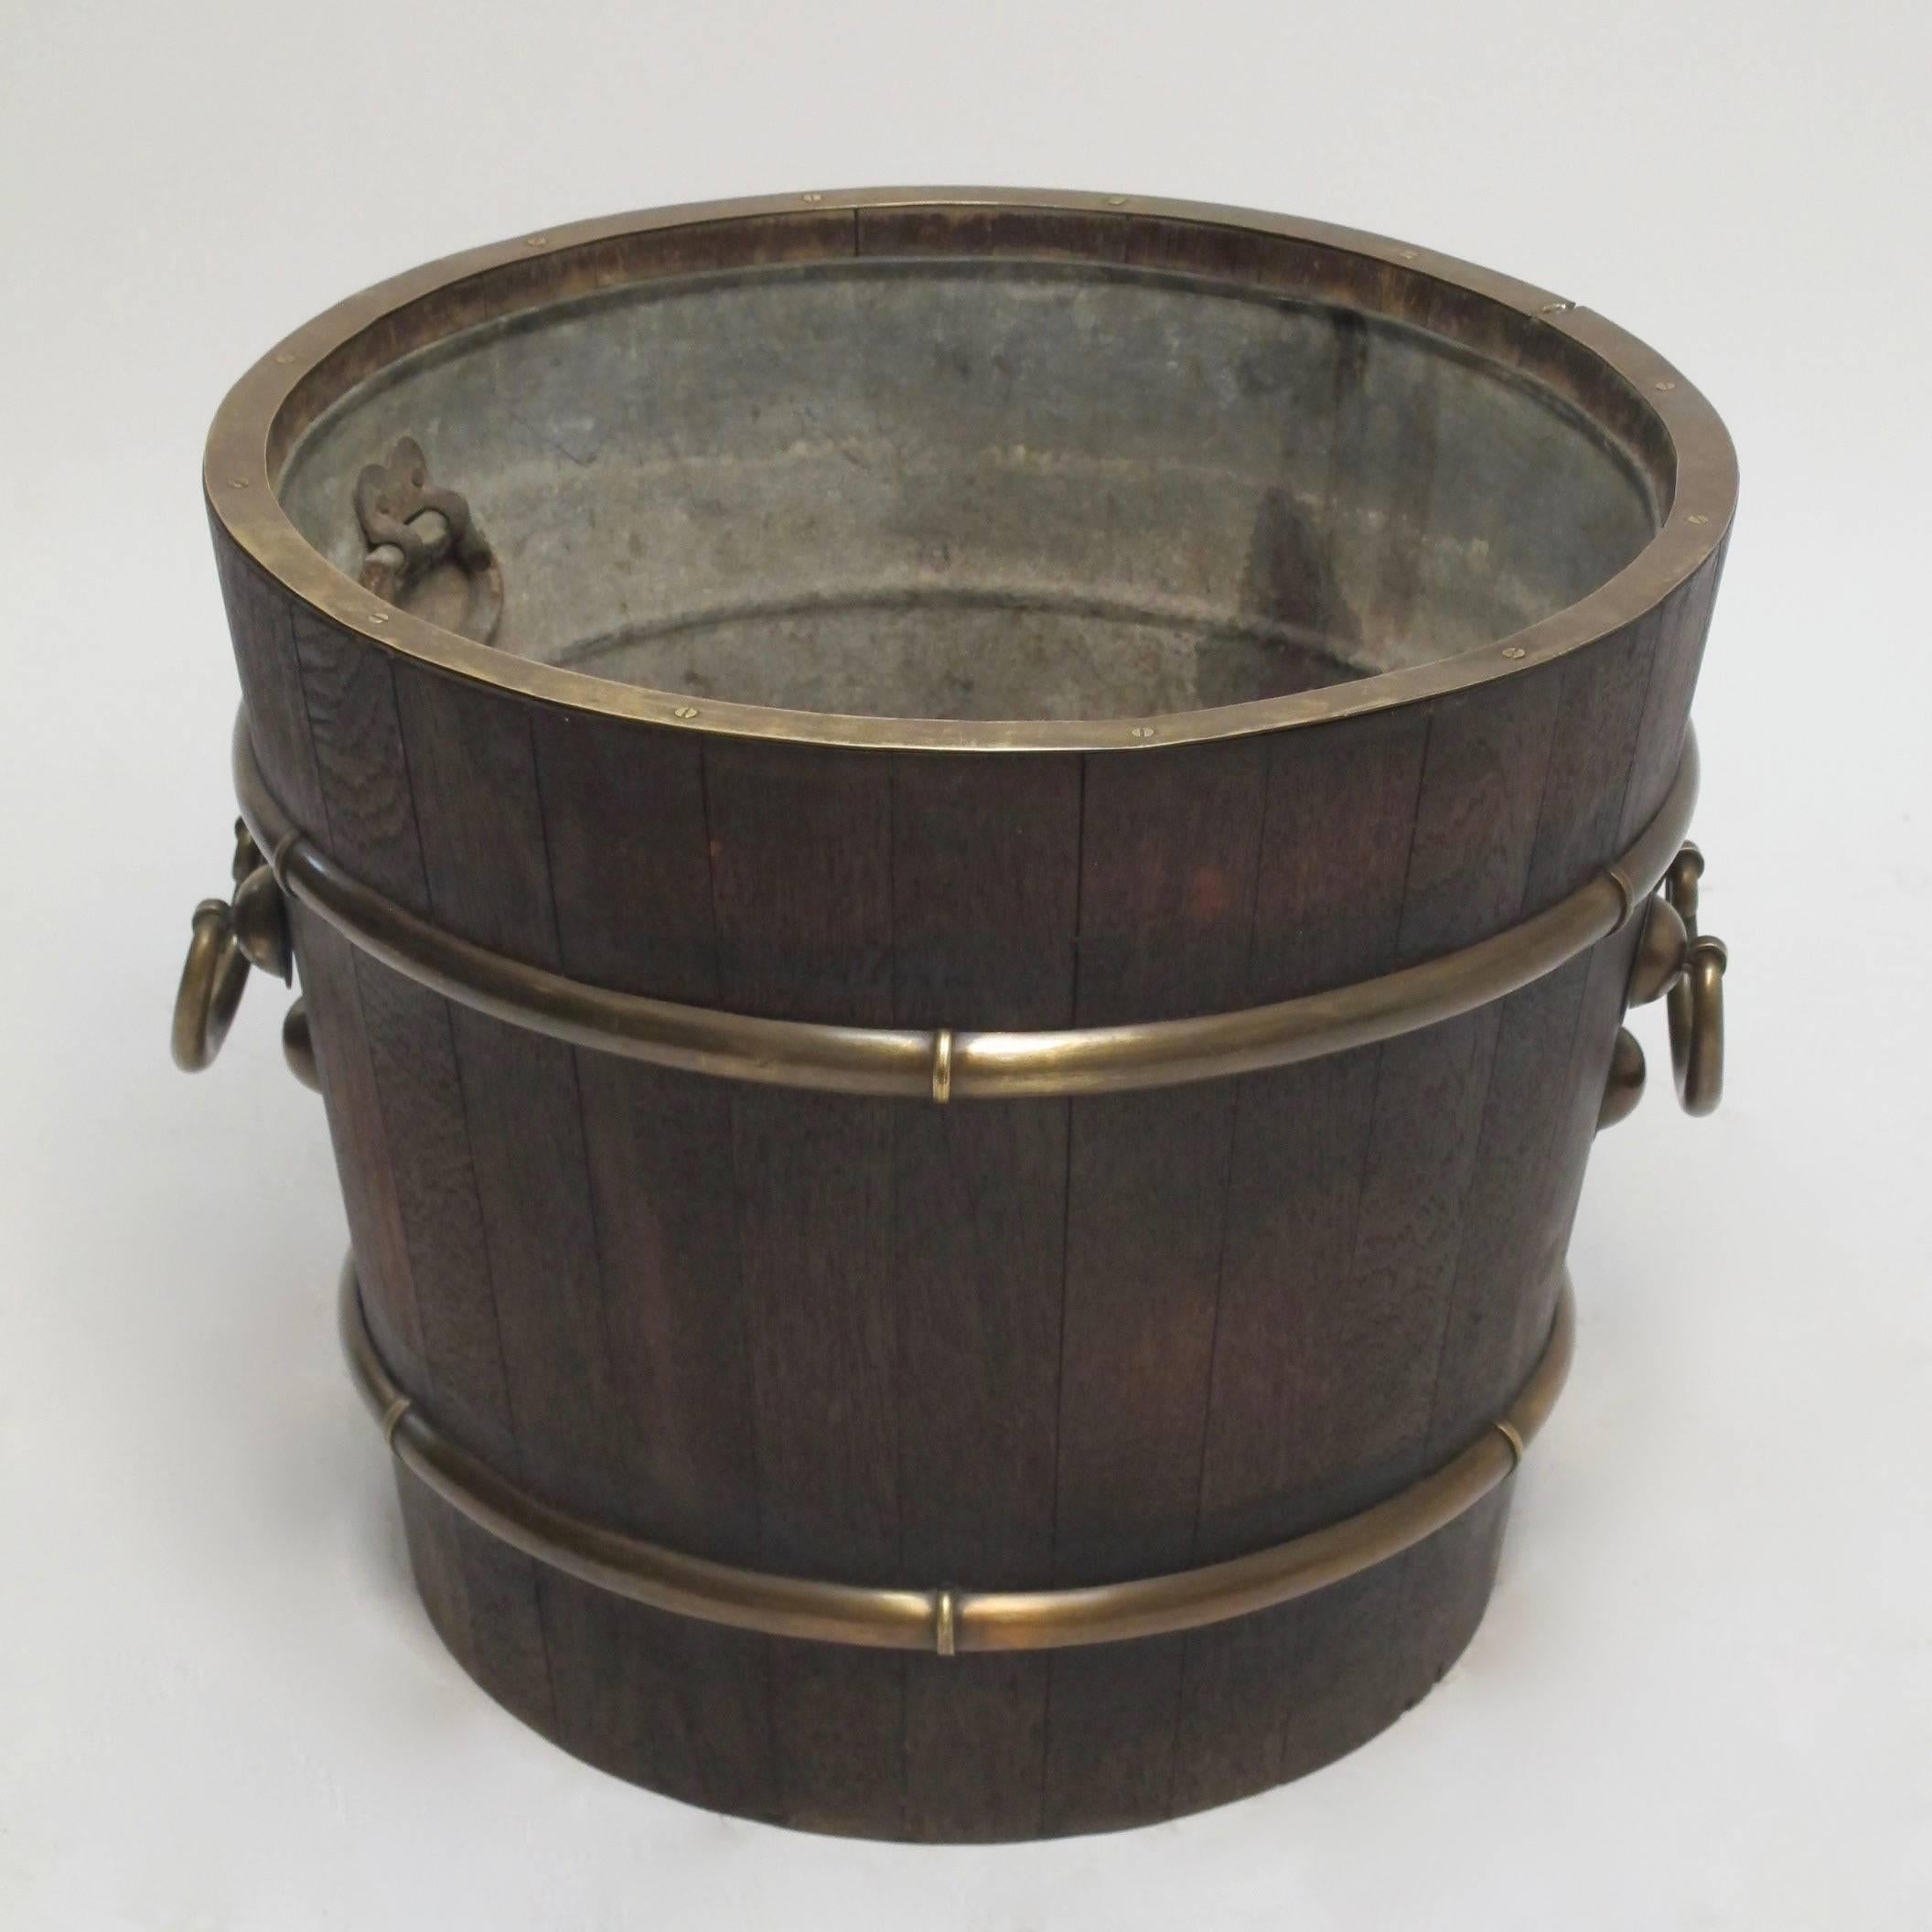 Unusual brass bound elmwood barrel with original zinc liner. China, mid-20th century.